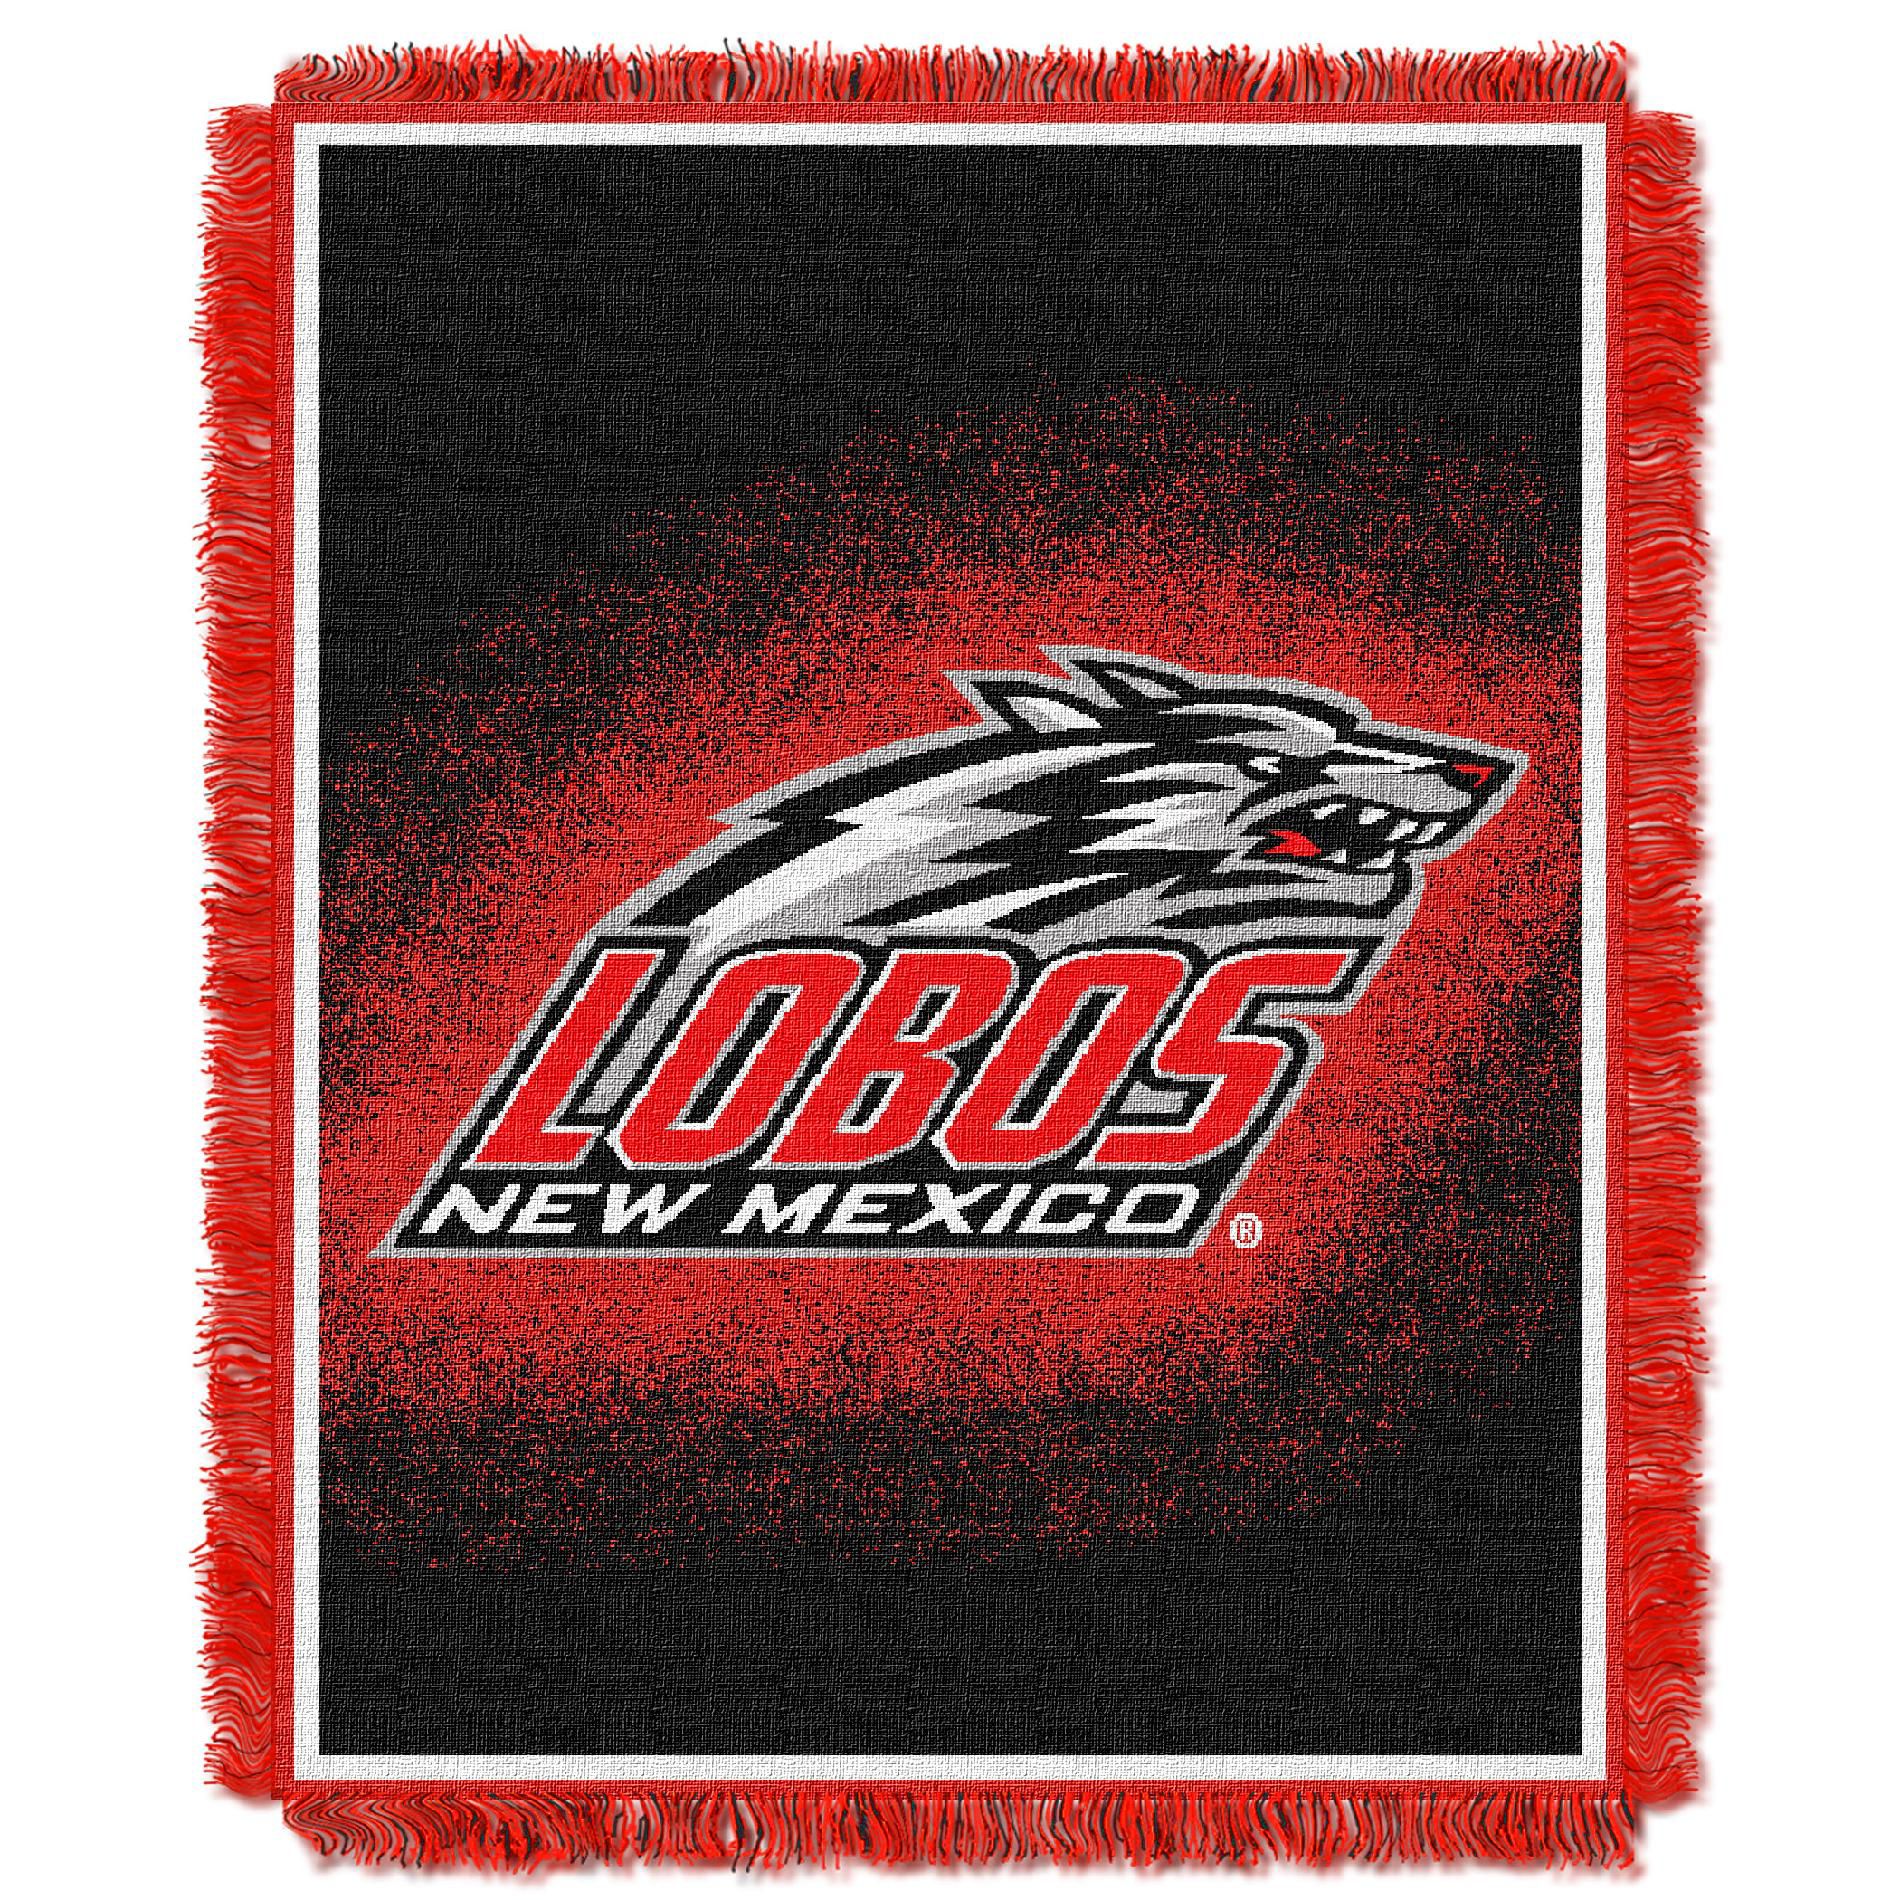 NCAA 019 Focus New Mexico Jacquard Throw